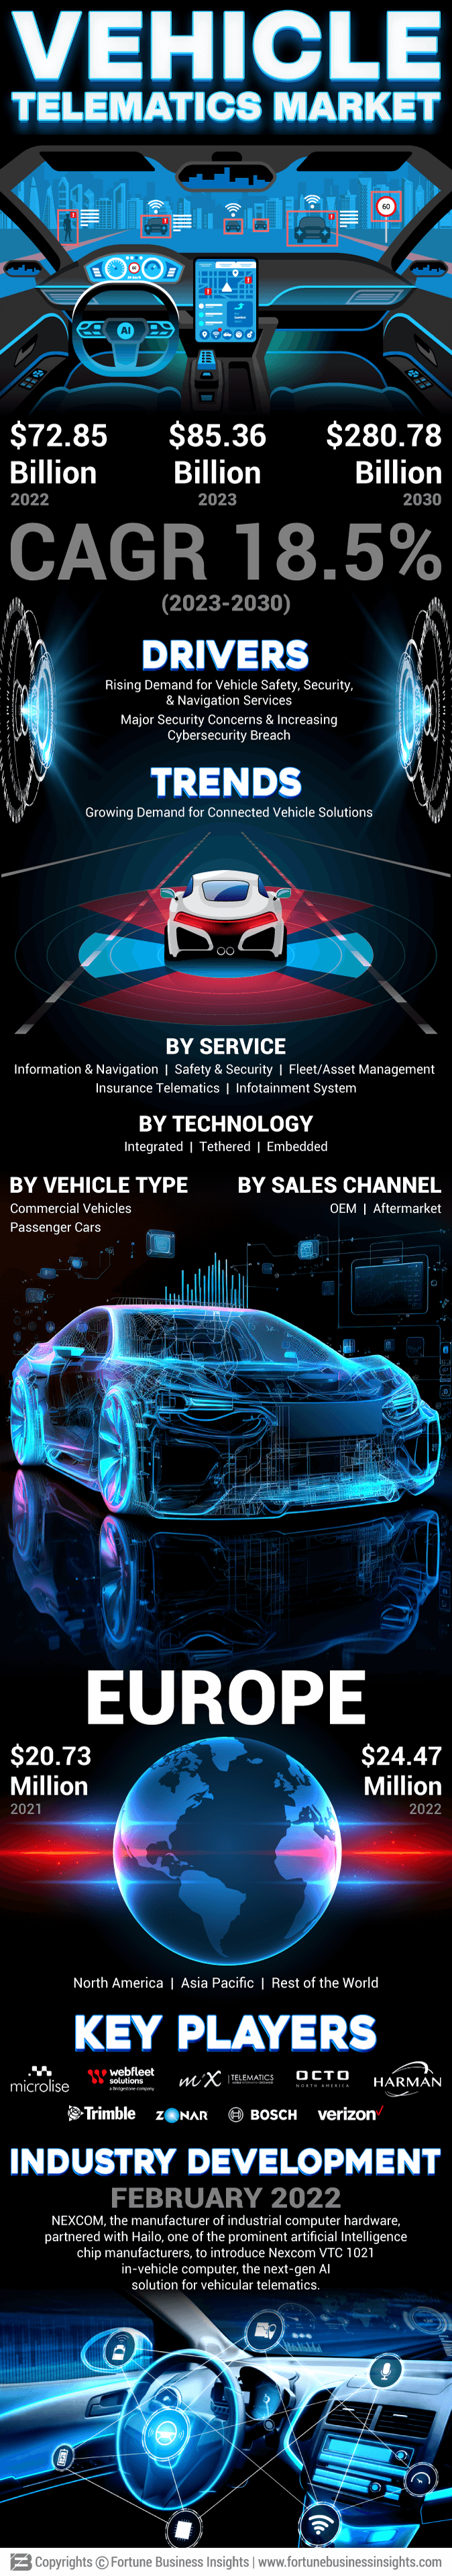 Vehicle Telematics Market 